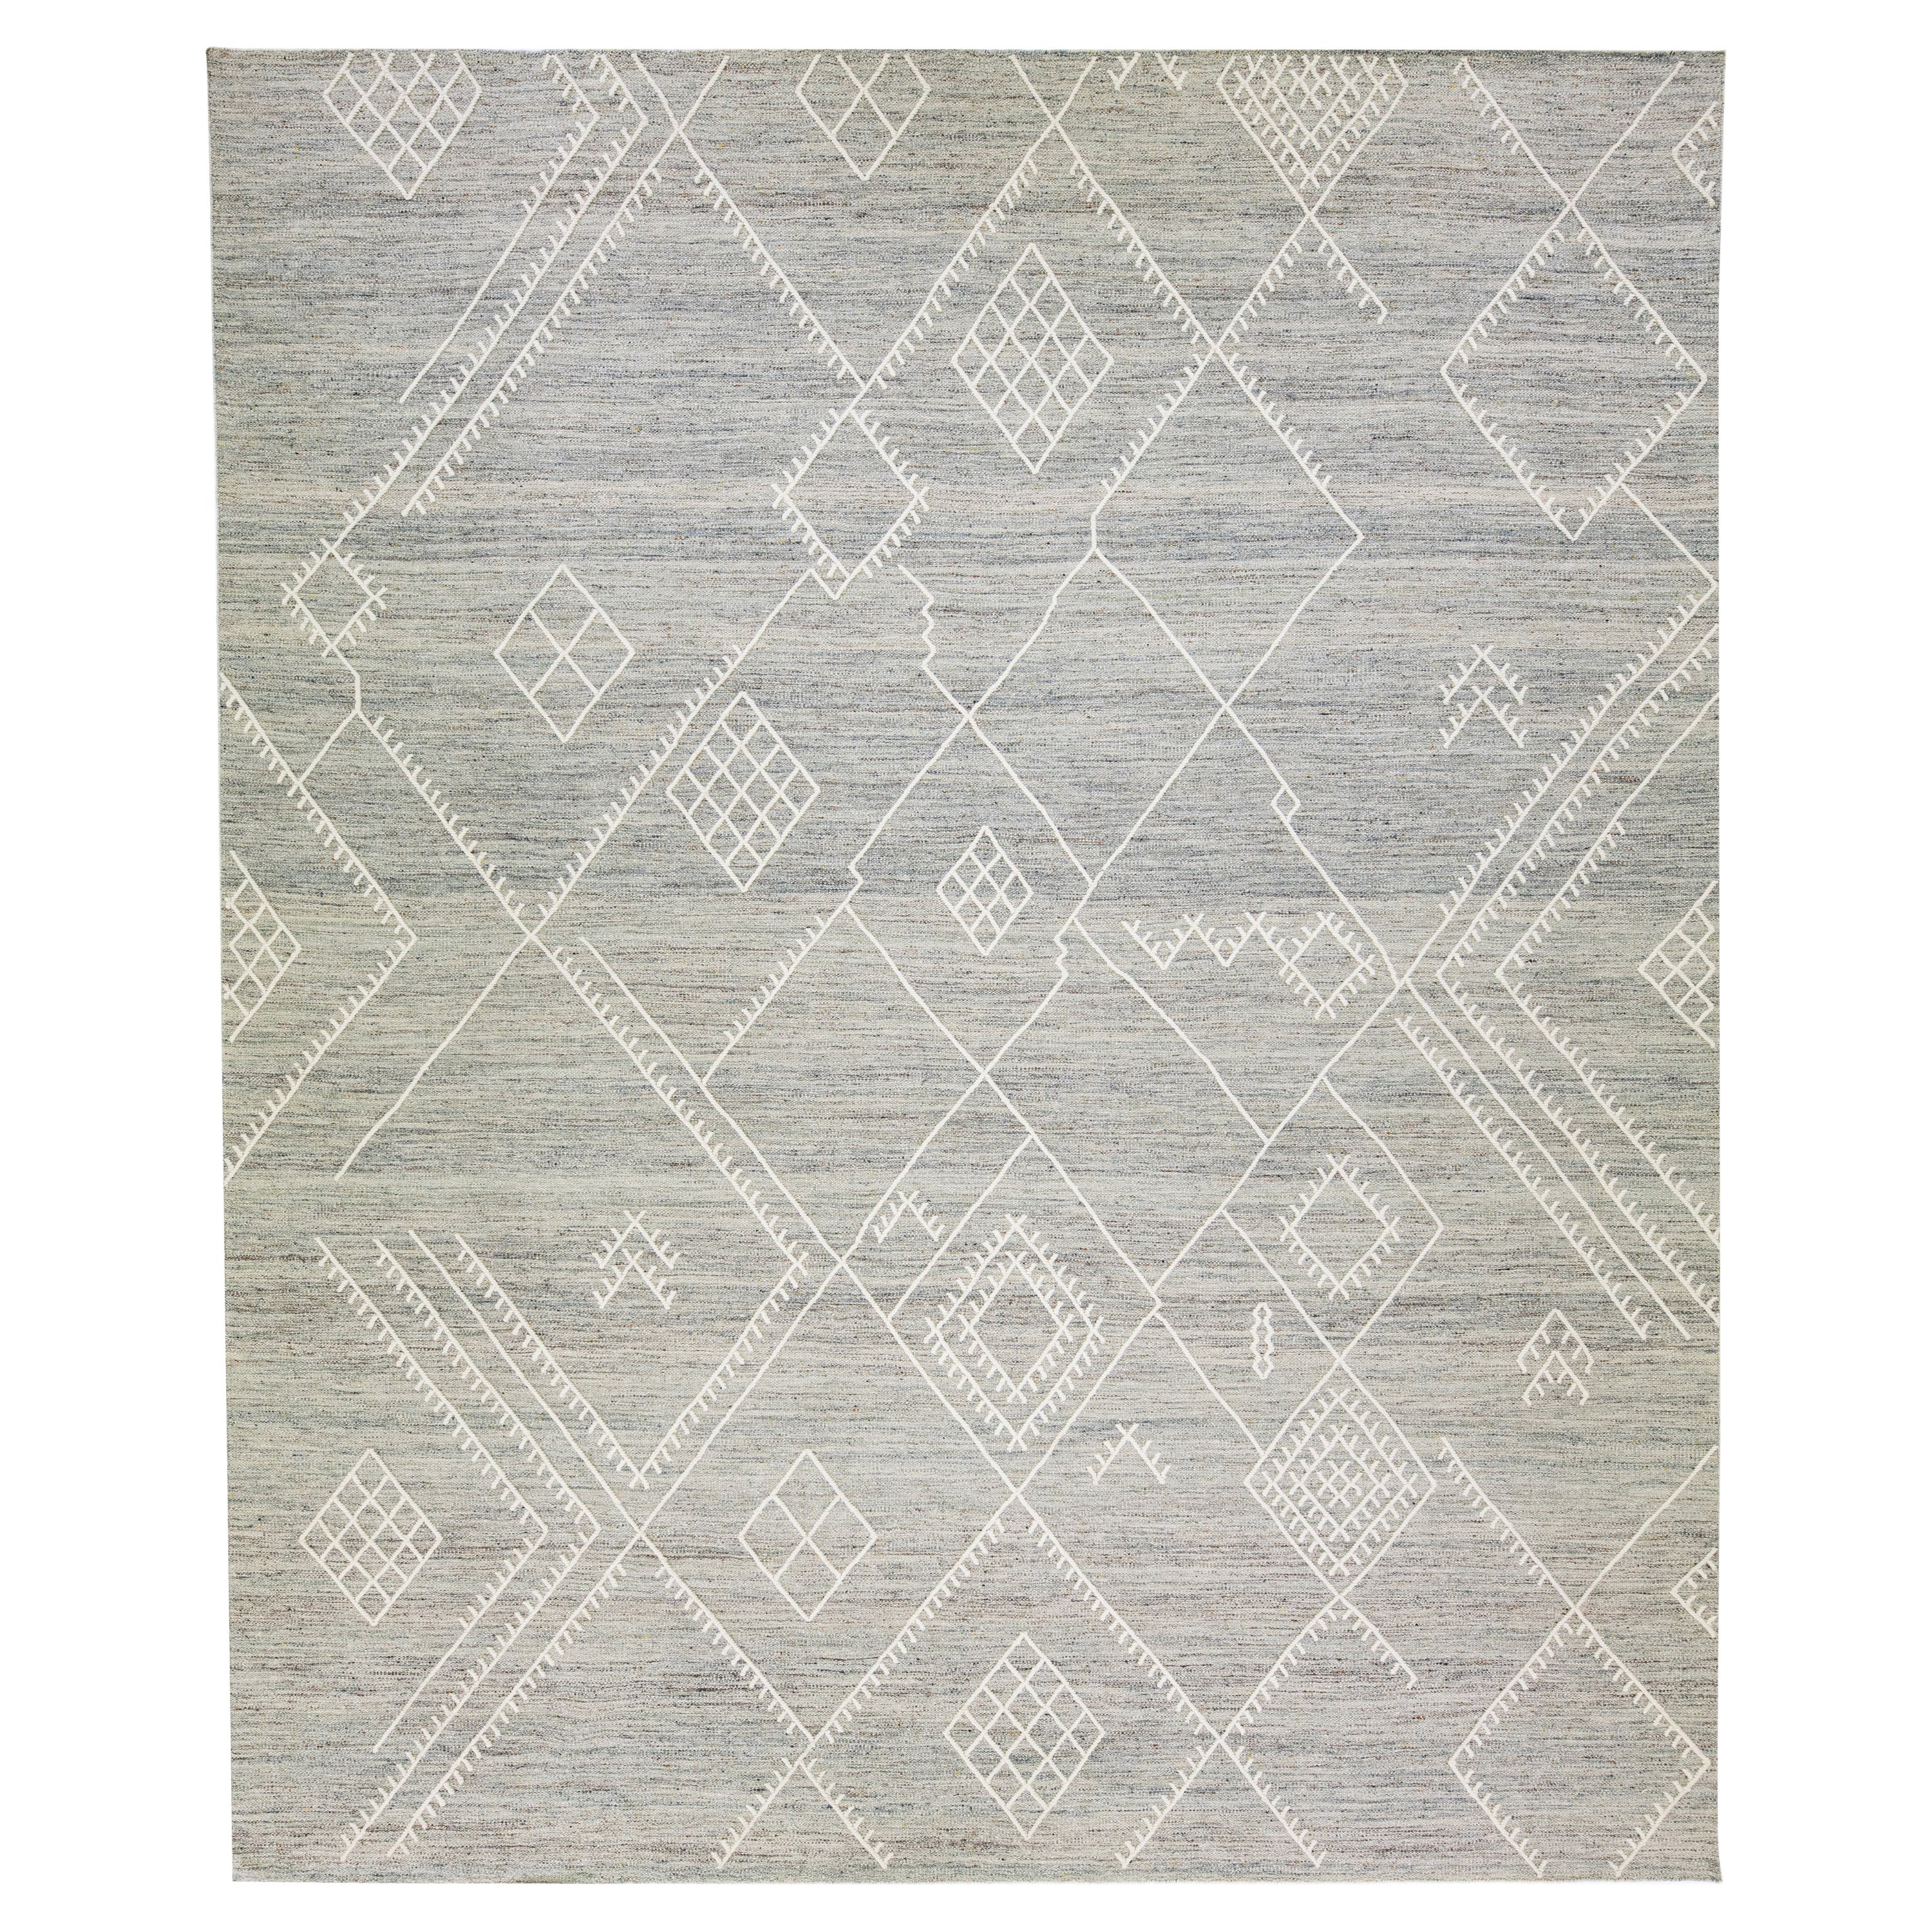 Apadana's Nantucket Collection Flatweave Kilim Gray Wool Rug with Coastal Design